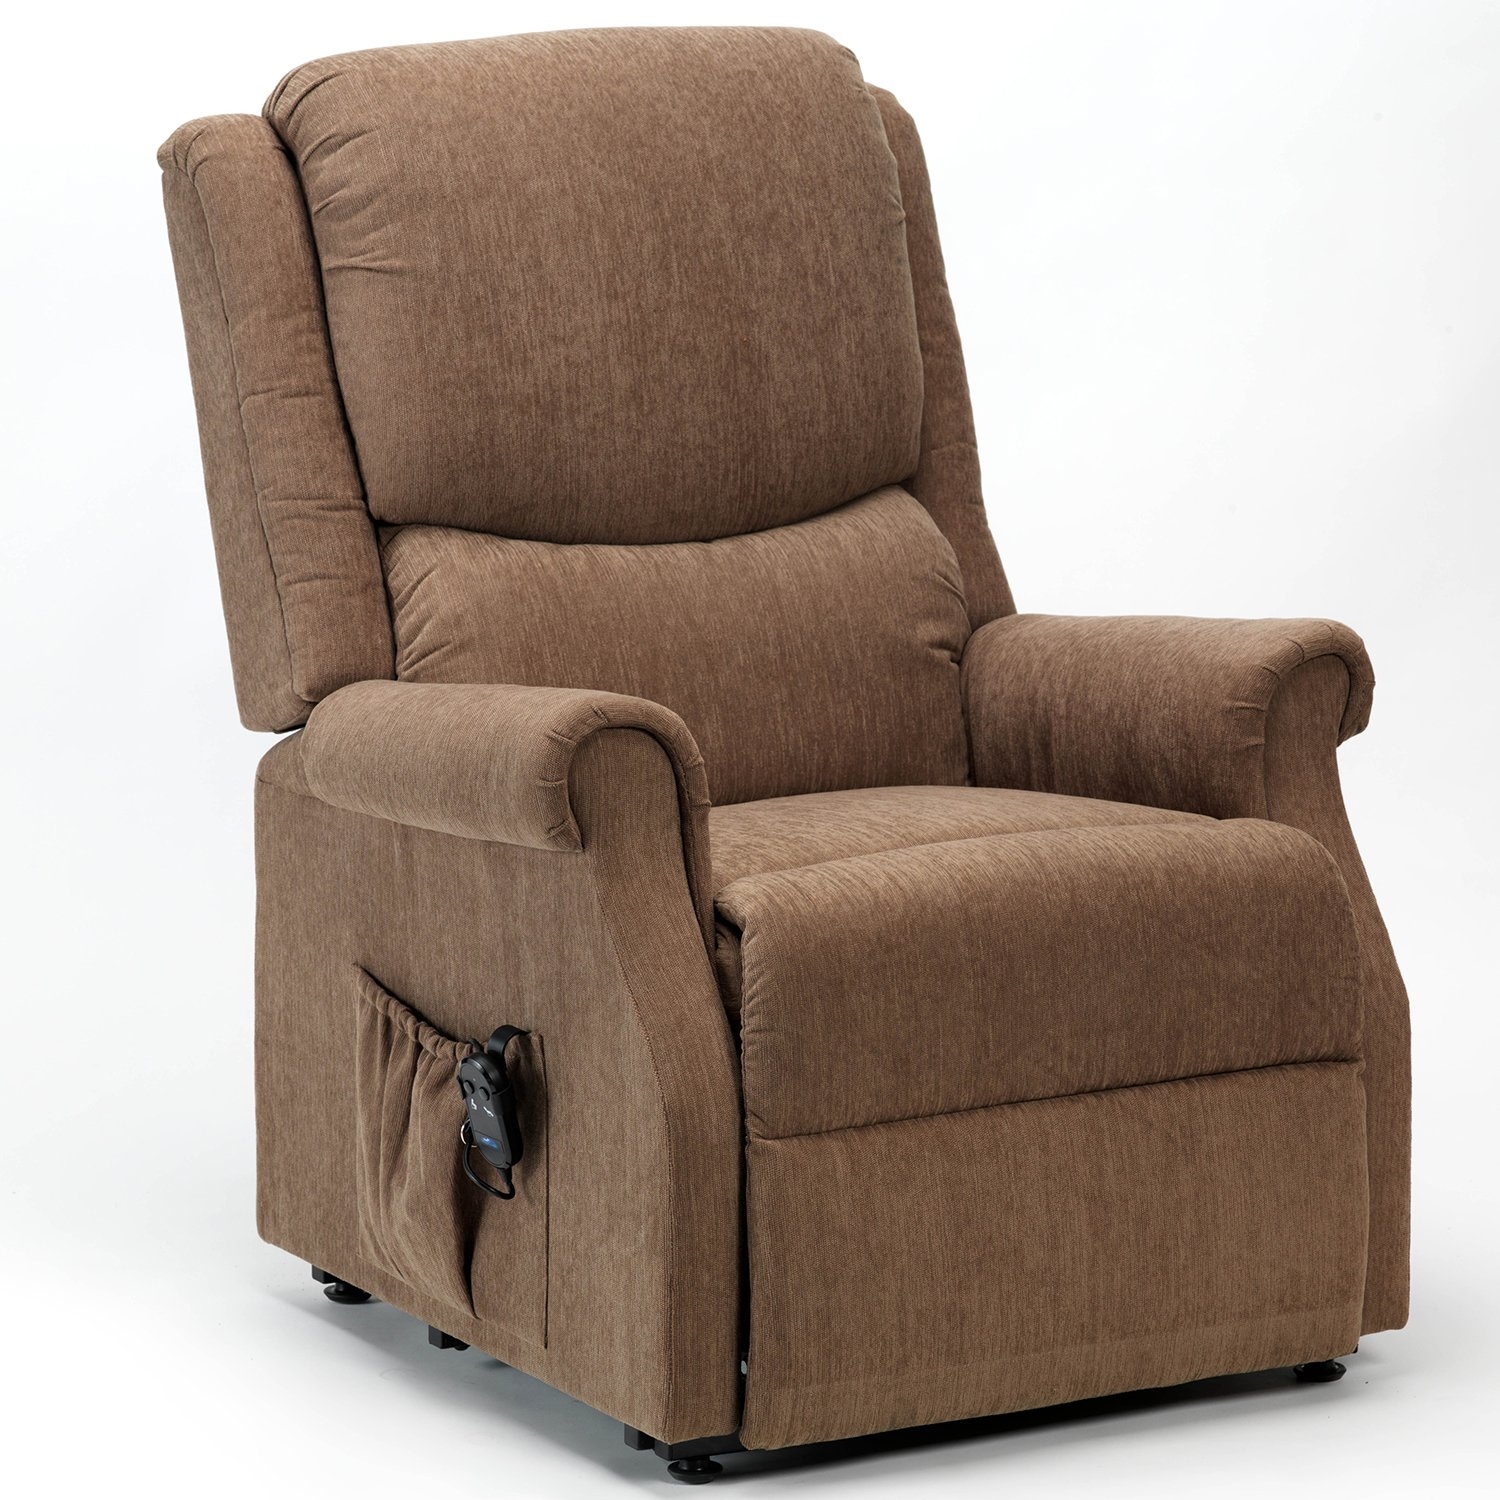 Indiana Single Motor Standard & Petite Riser Recliner Chair – Mushroom